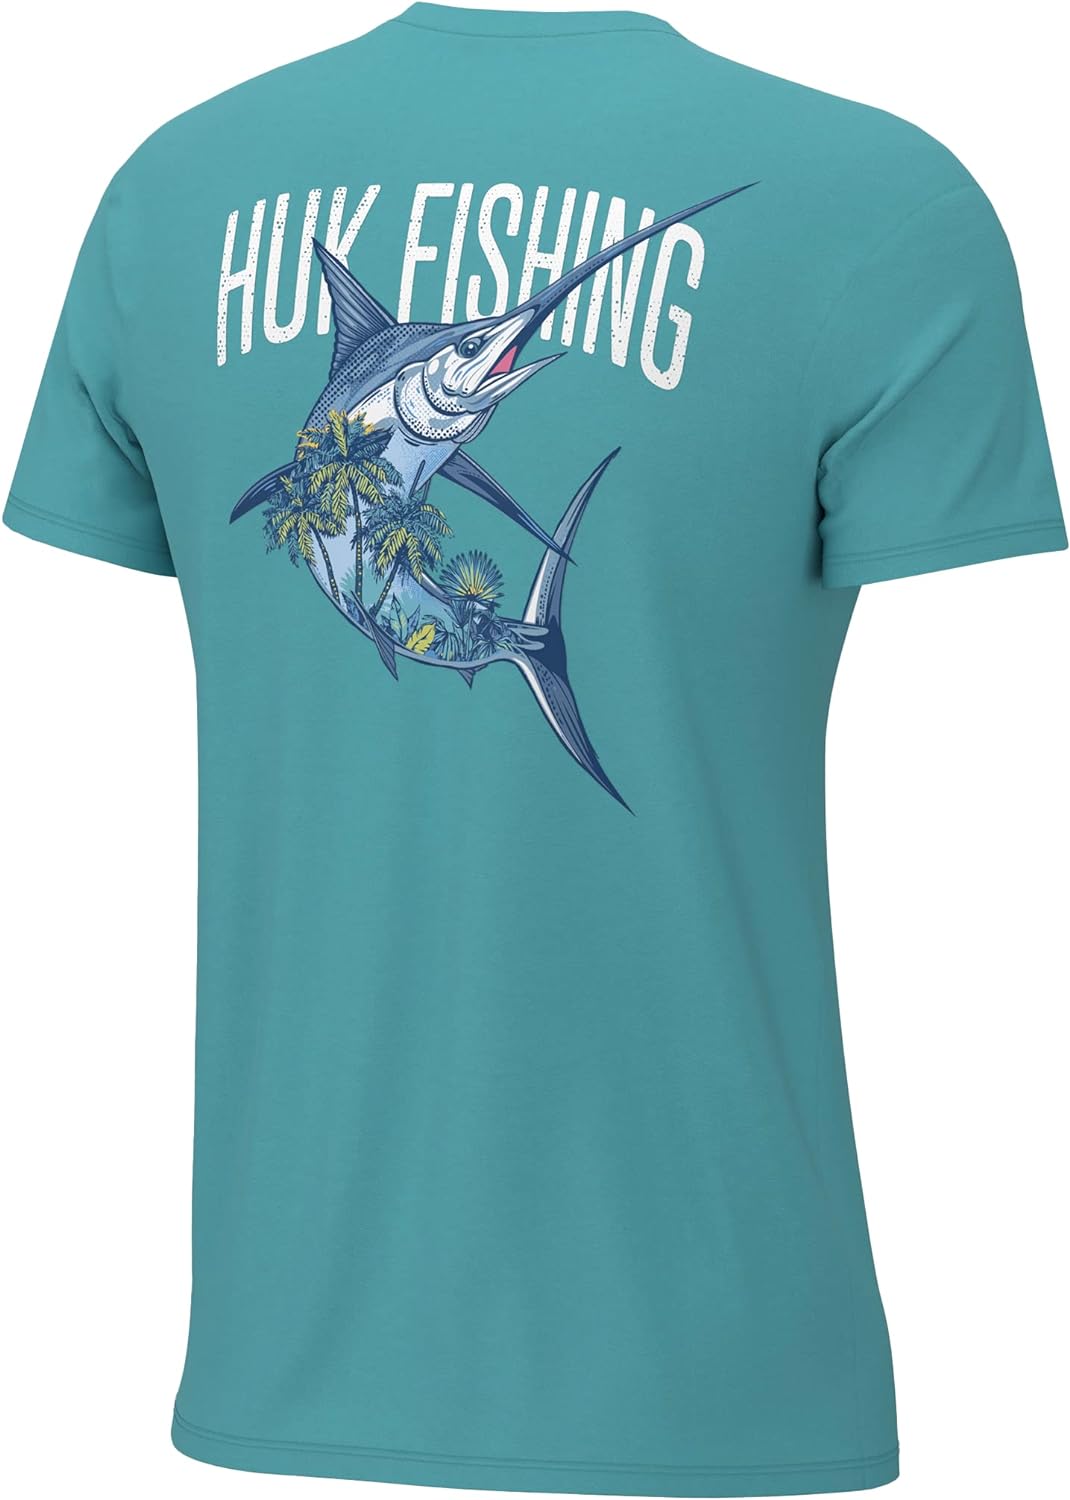 HUK Boys' Short Sleeve Performance Tee, Kids Fishing T-Shirt